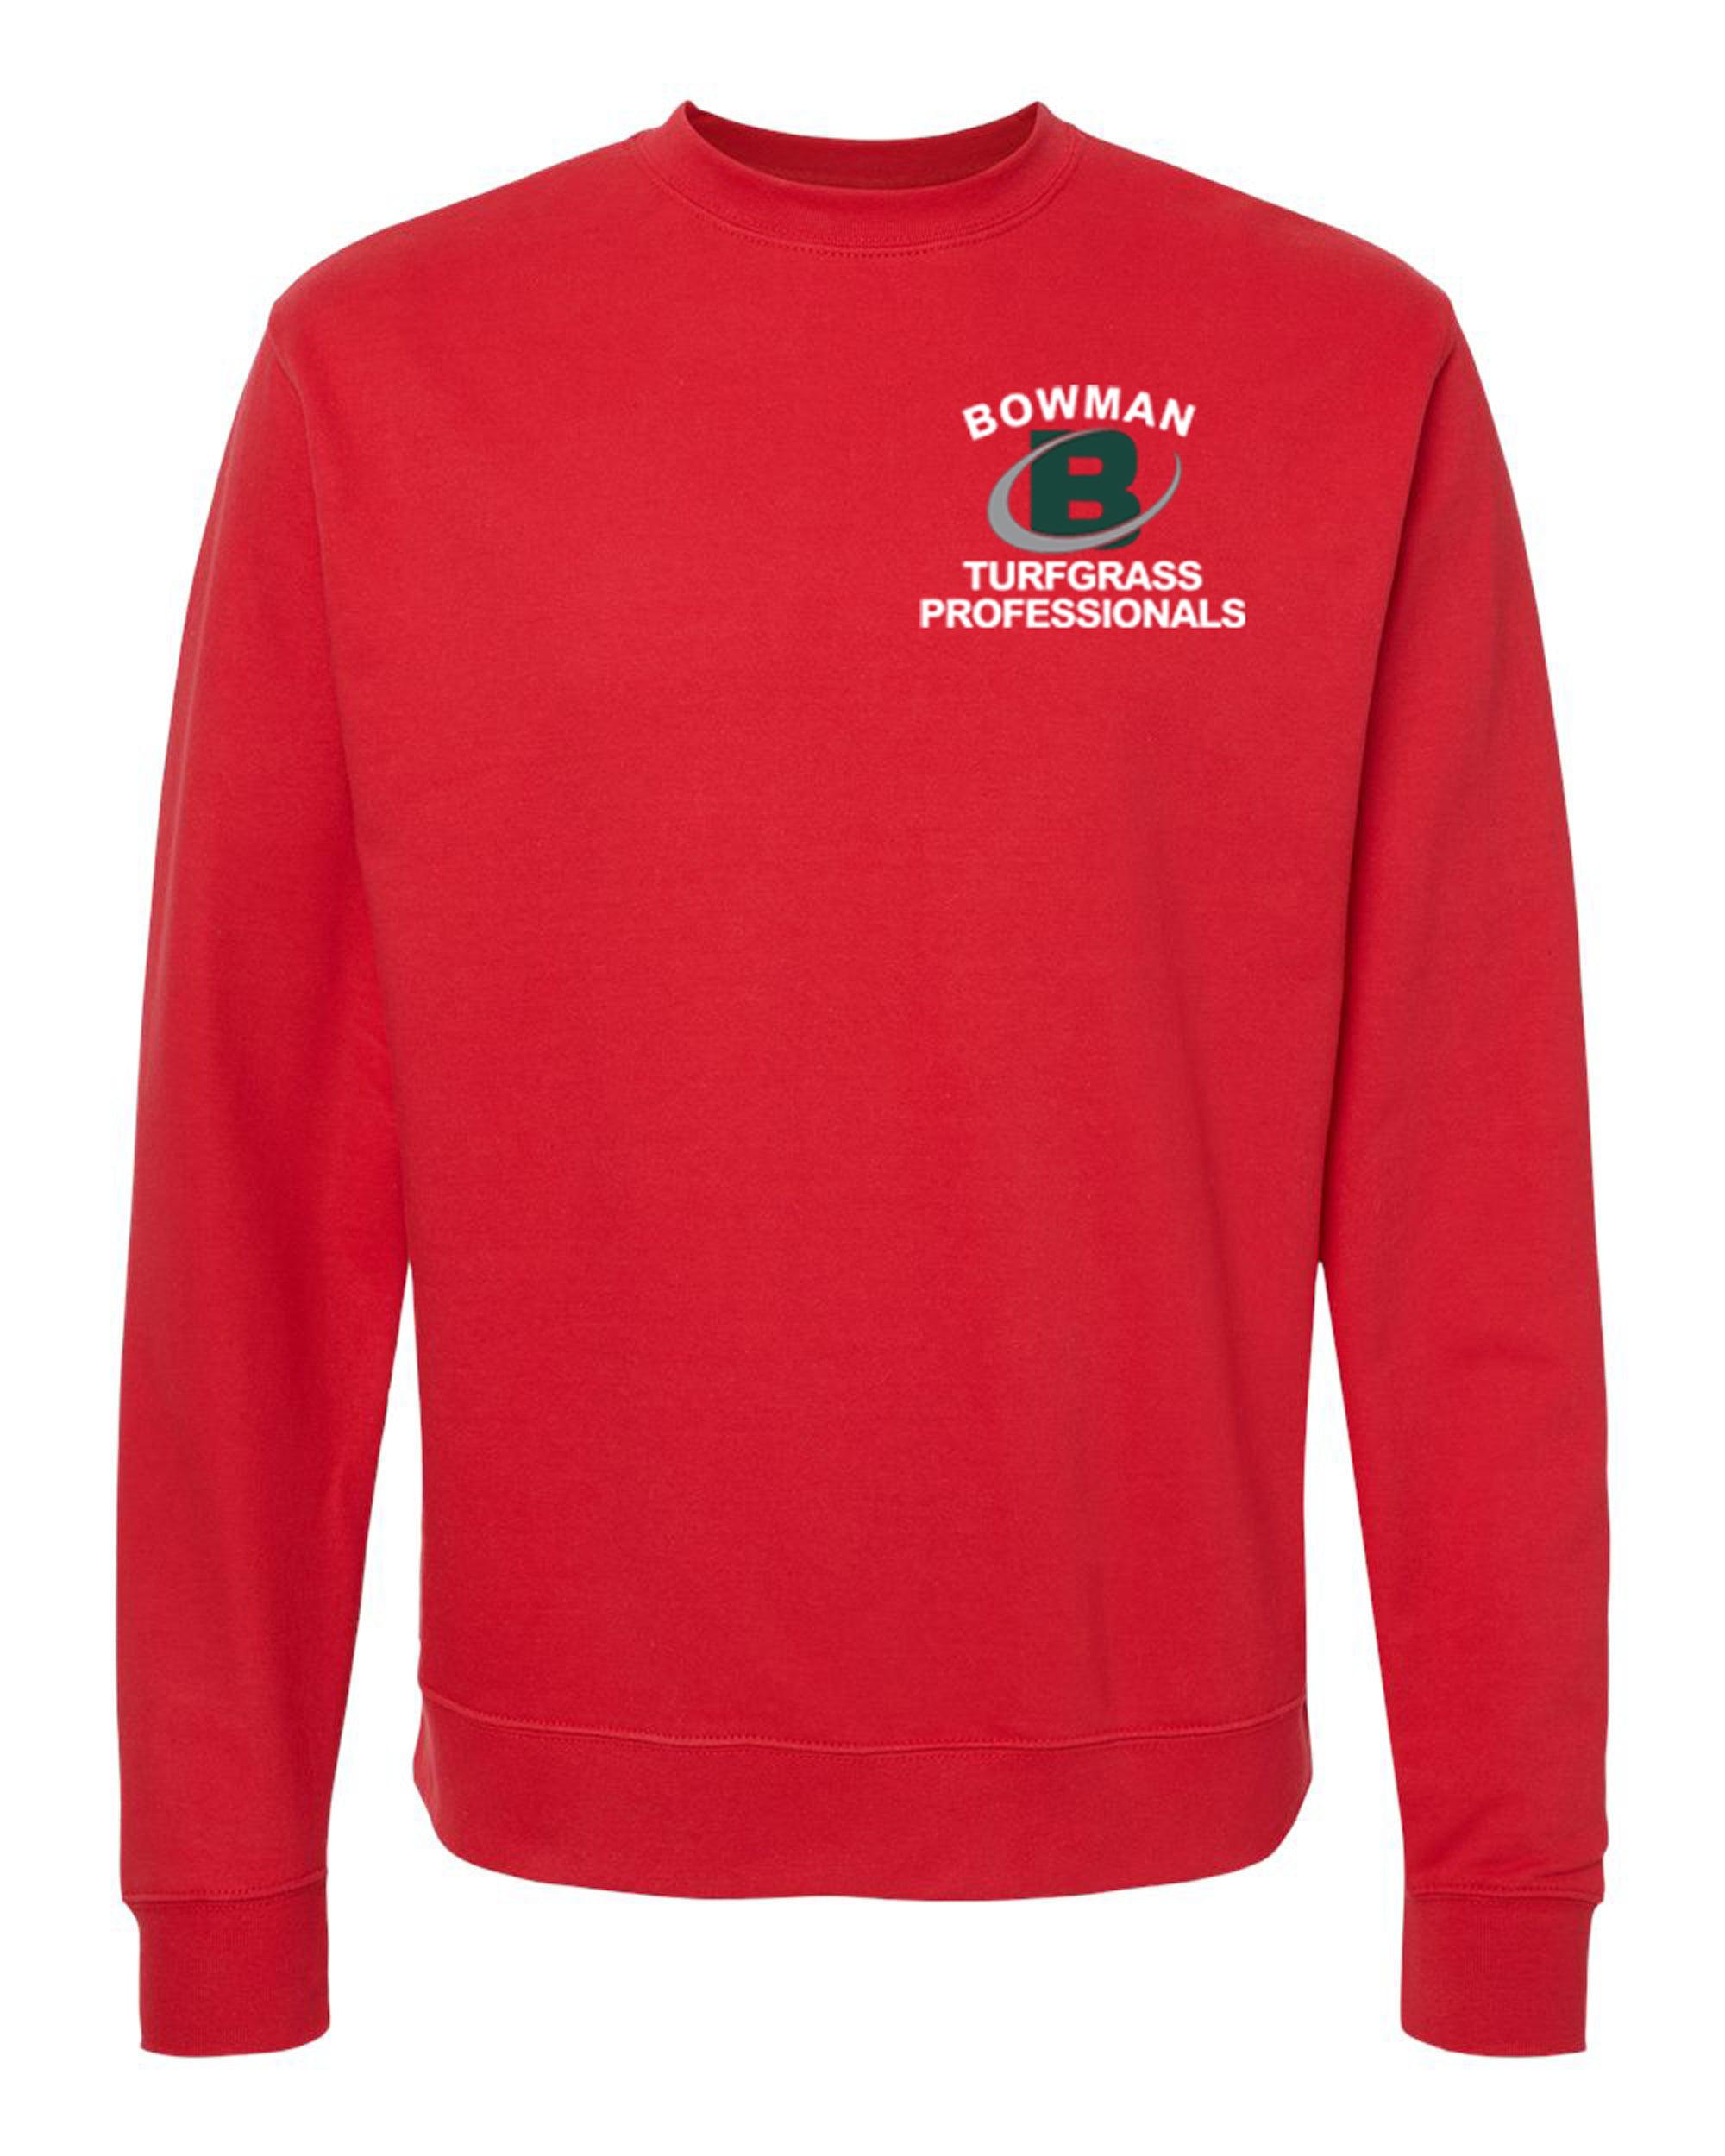 Bowman Turfgrass Professionals - Sweatshirt